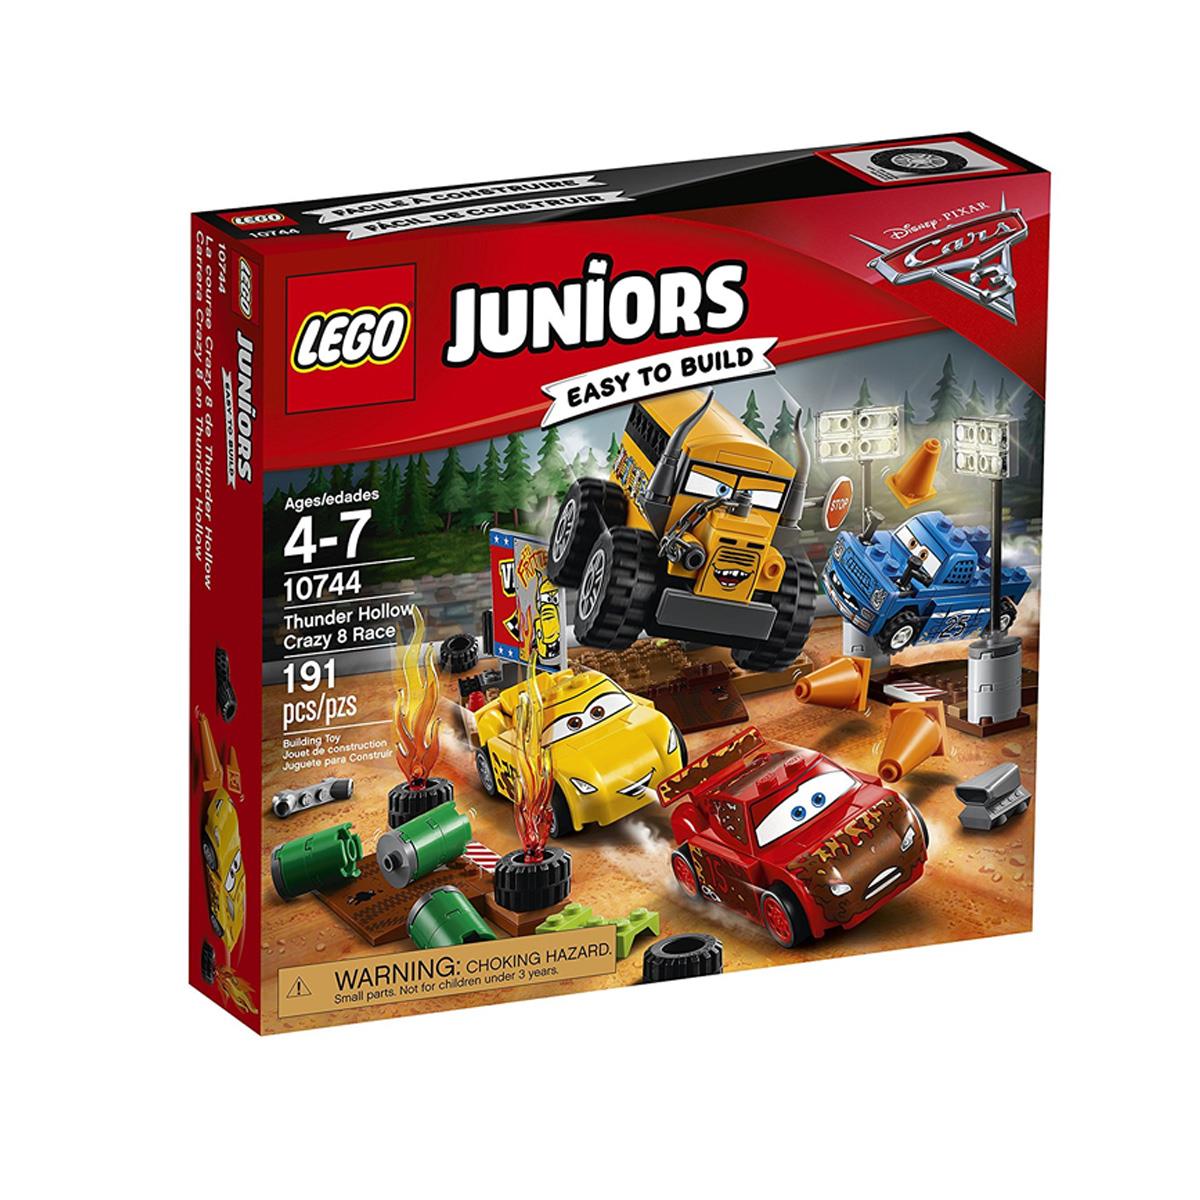 Lego City - Carros de Corrida — Banca Kids